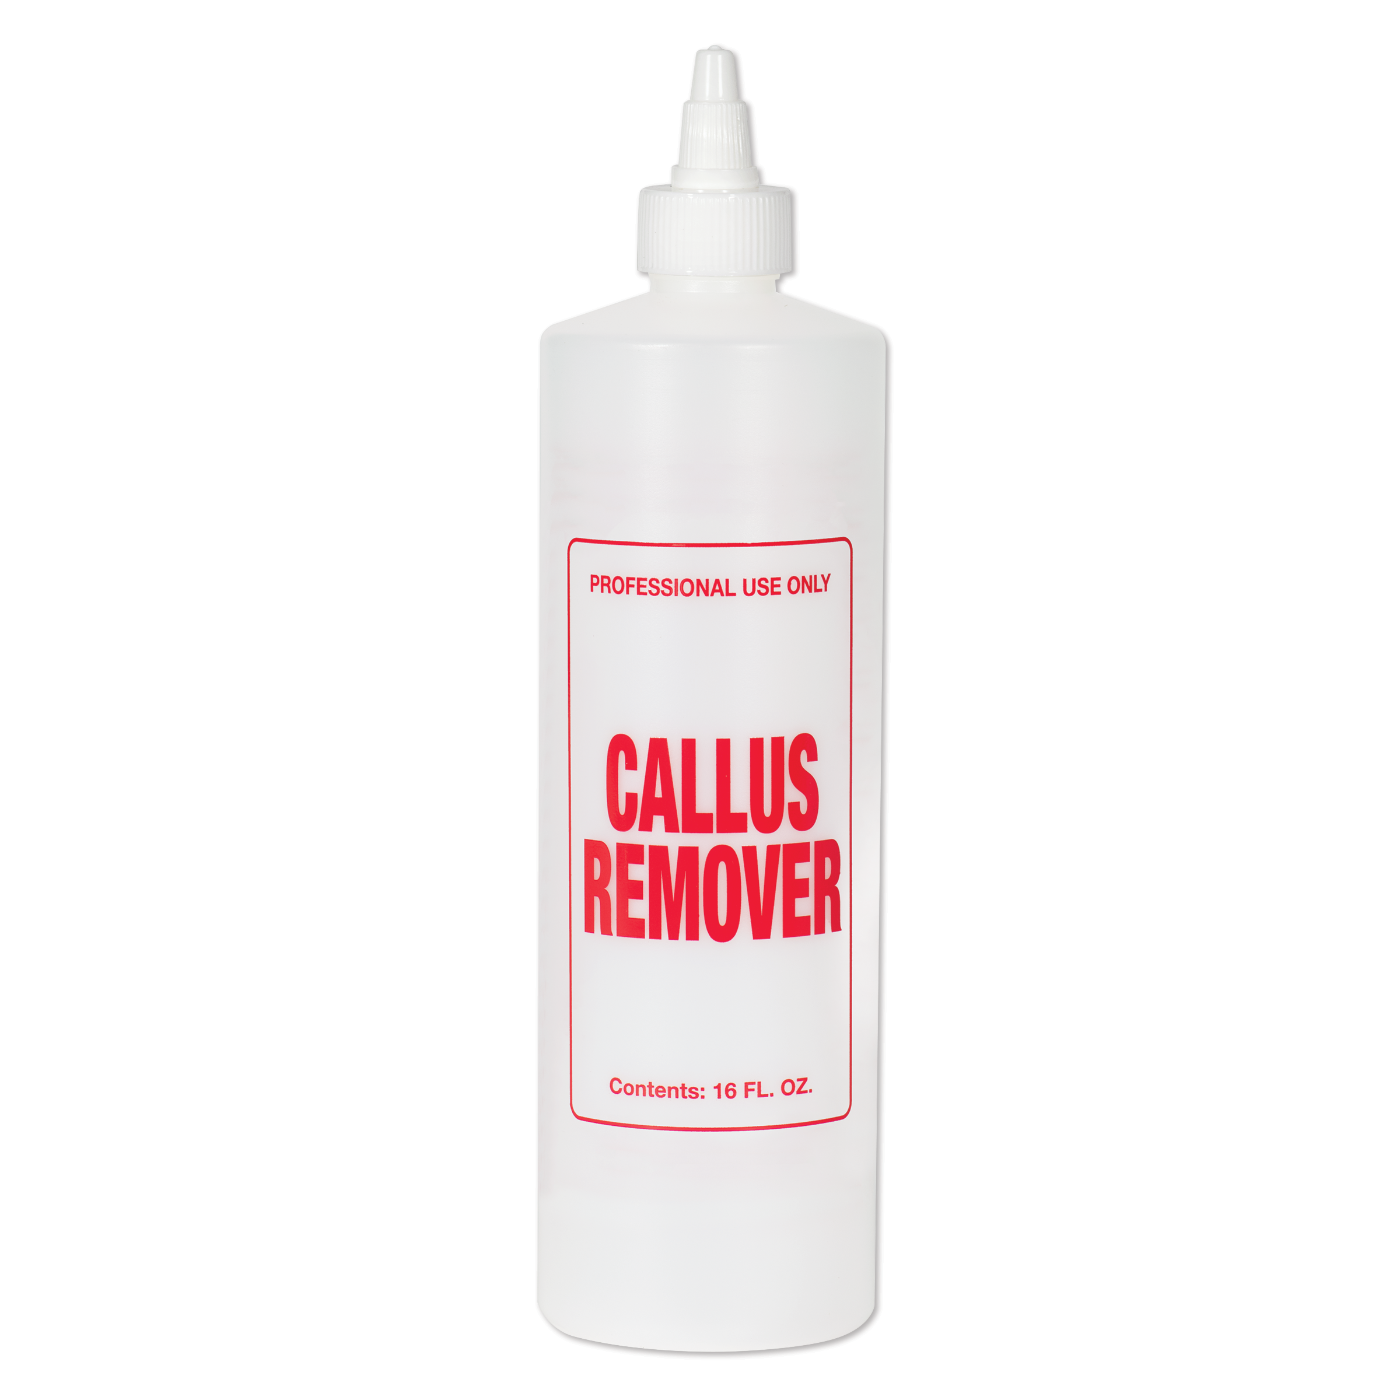 Imprinted Twist Top Bottle, Callus Remover, 16 oz.